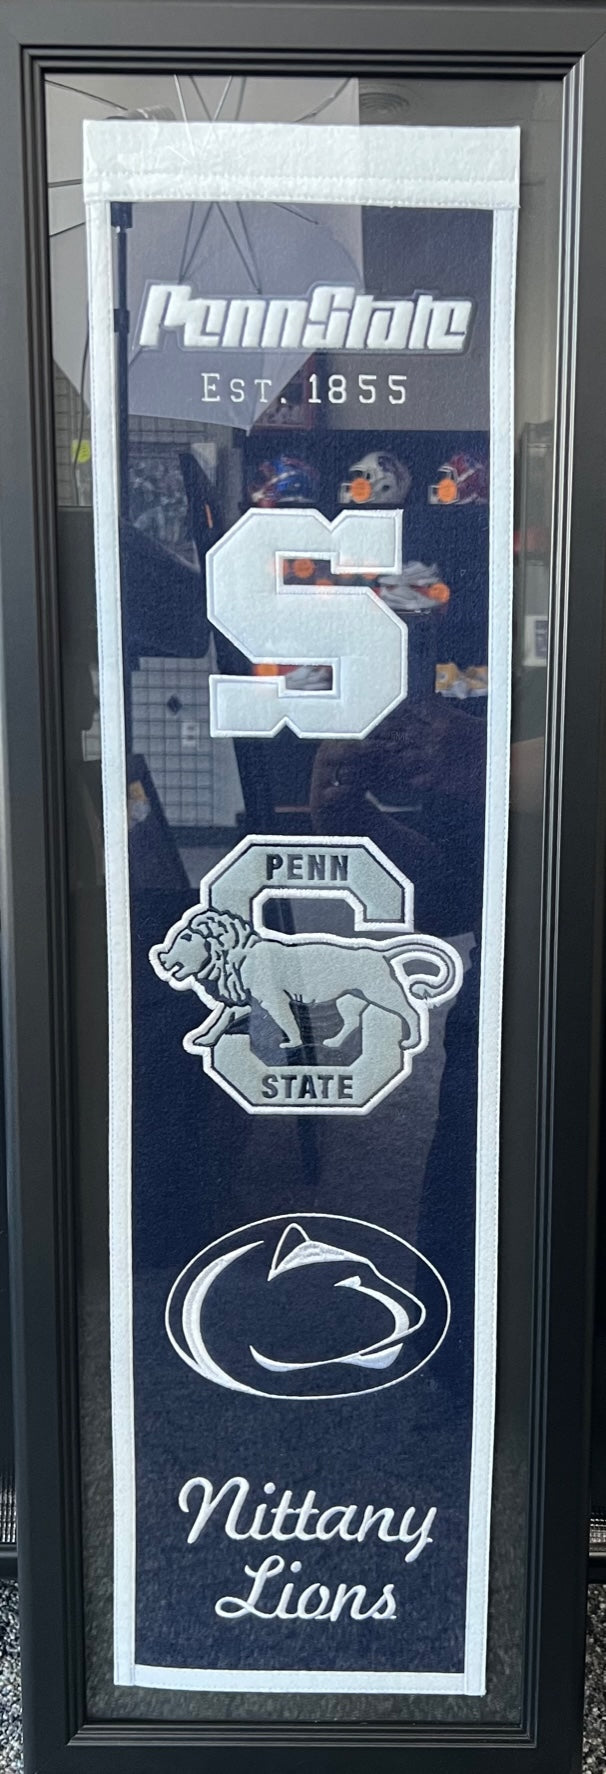 Penn State Nittany Lions Framed Heritage Banner